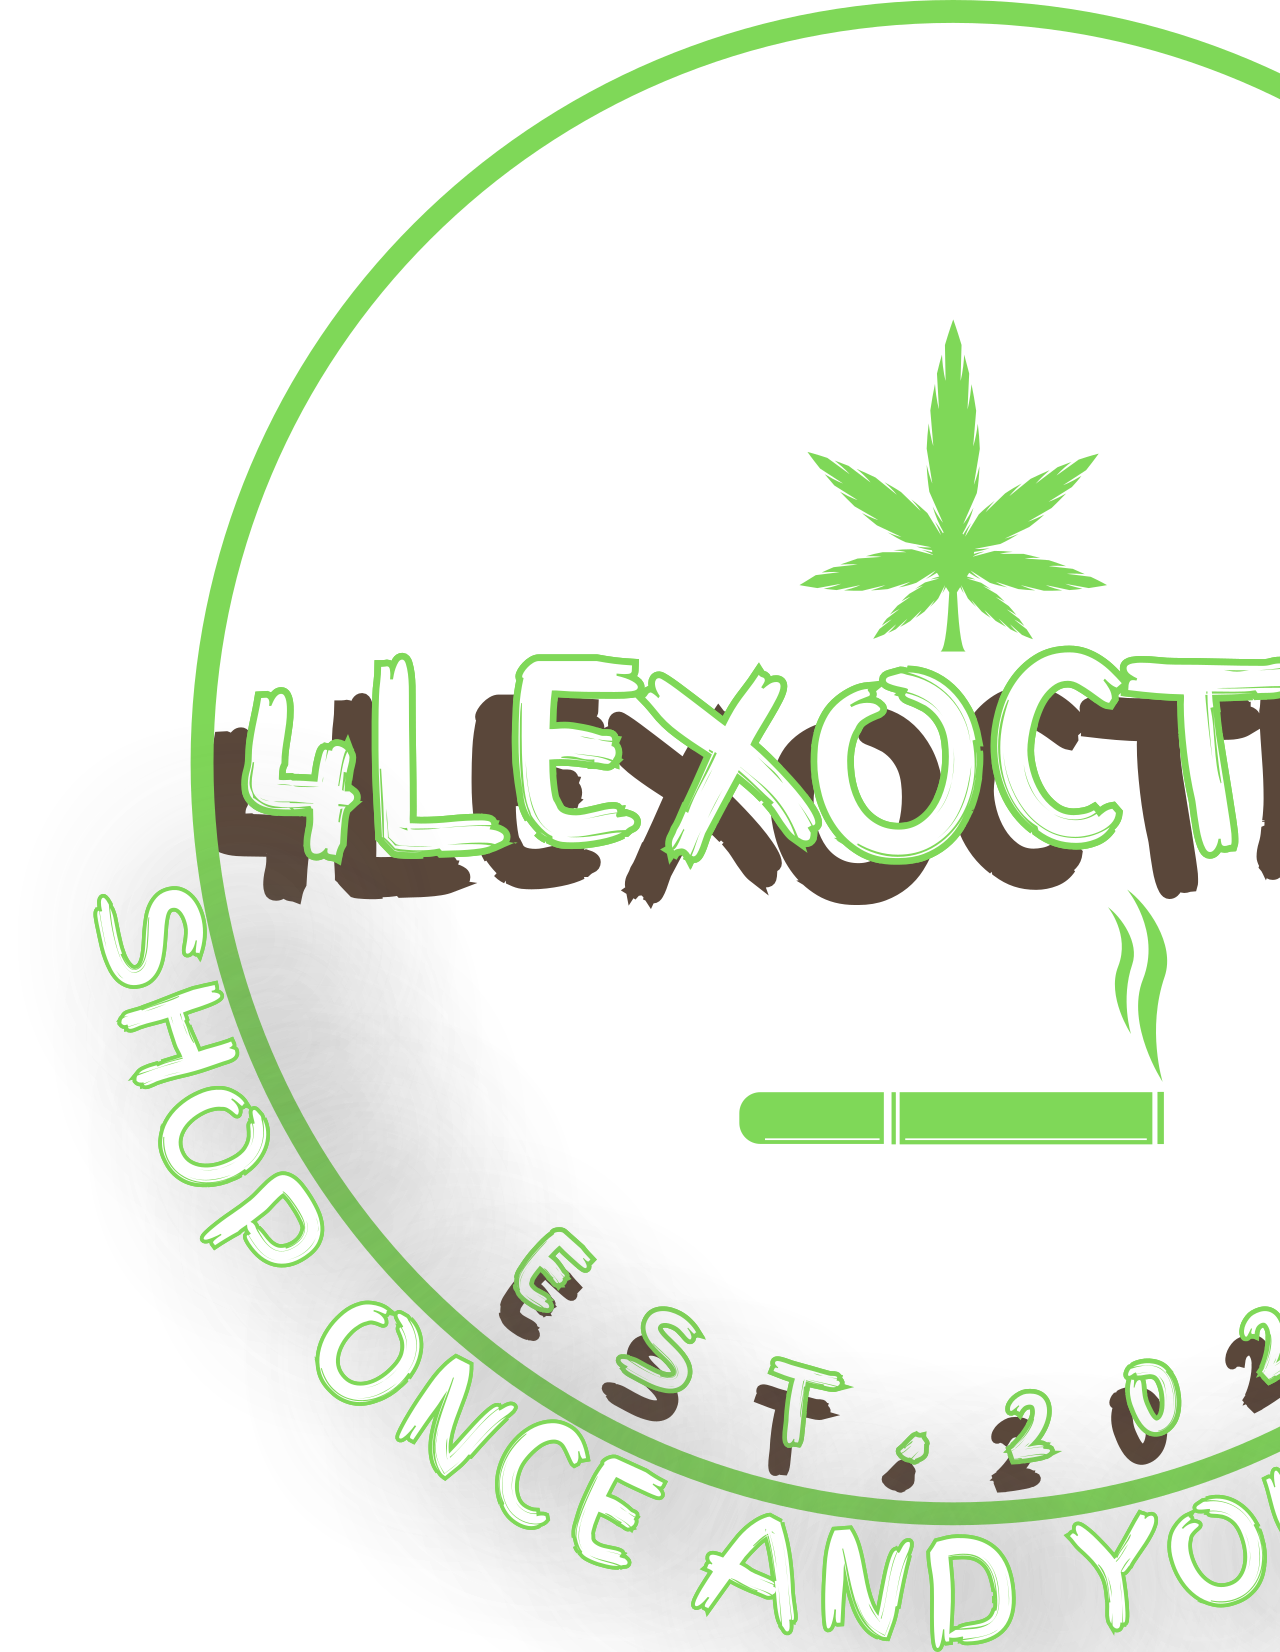 4LExoctics's logo